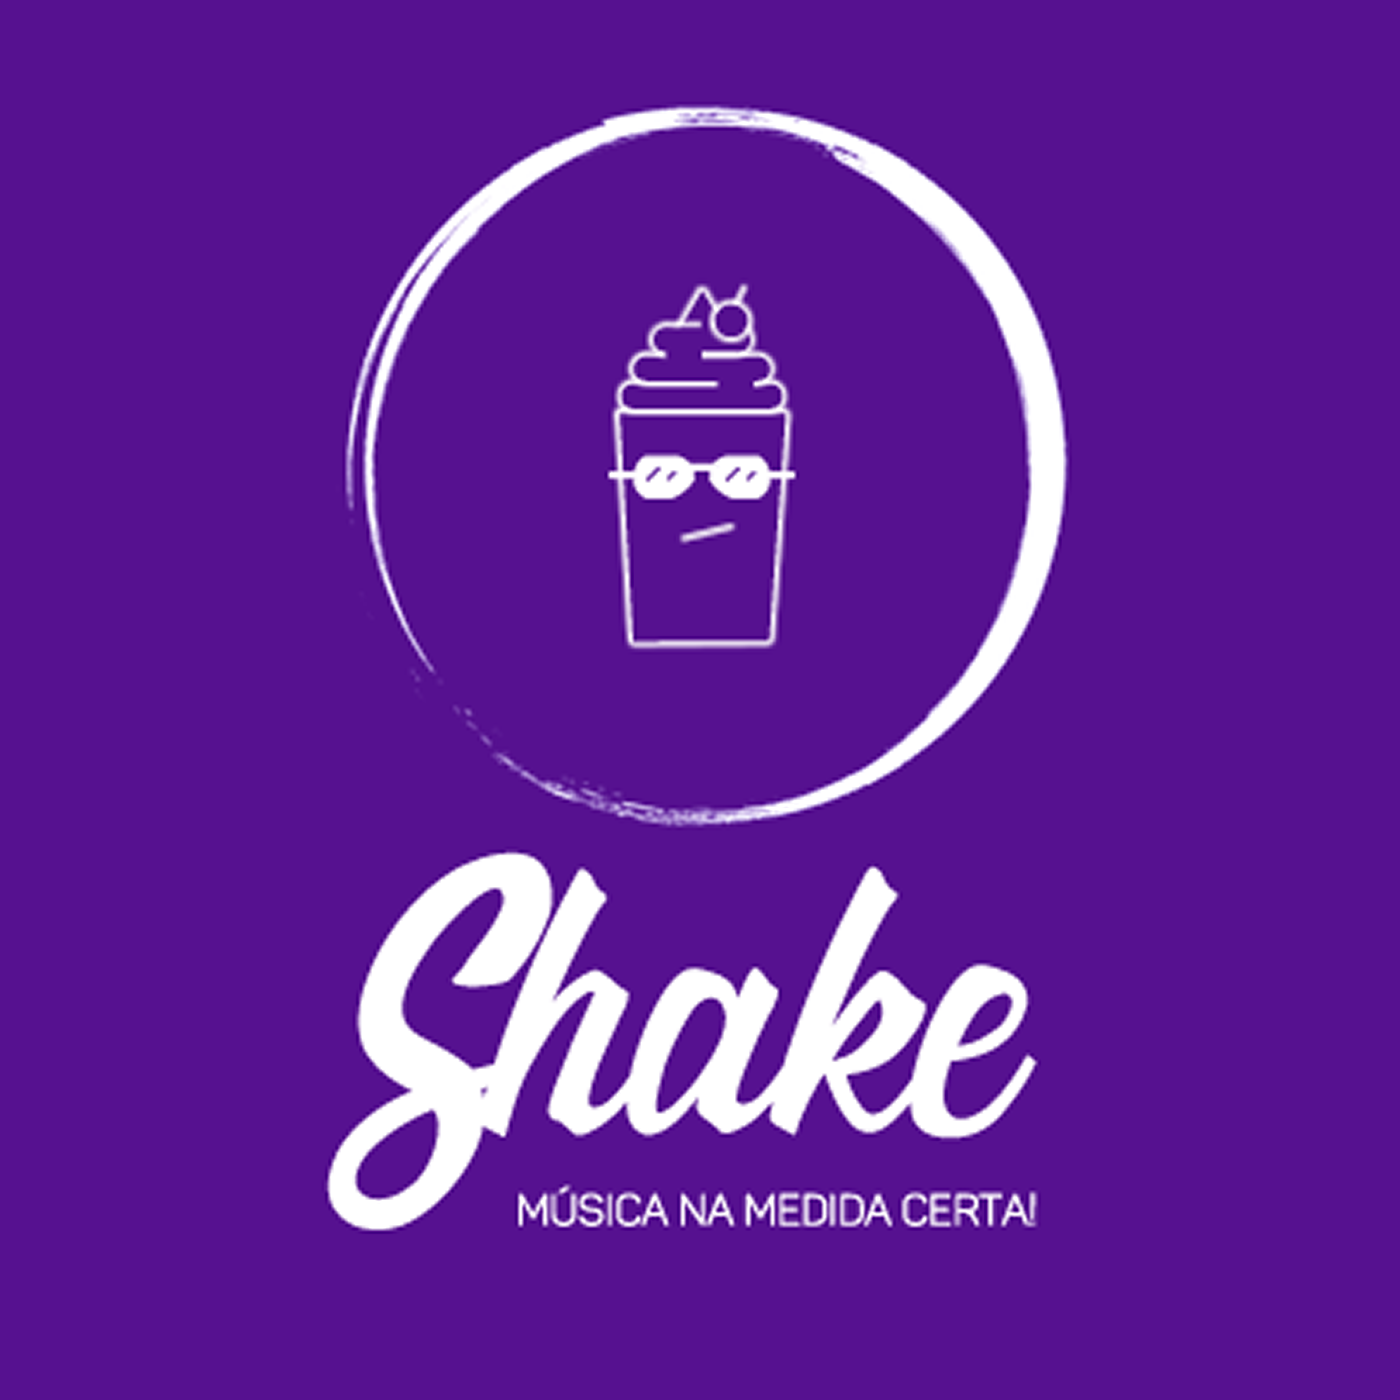 Shake!